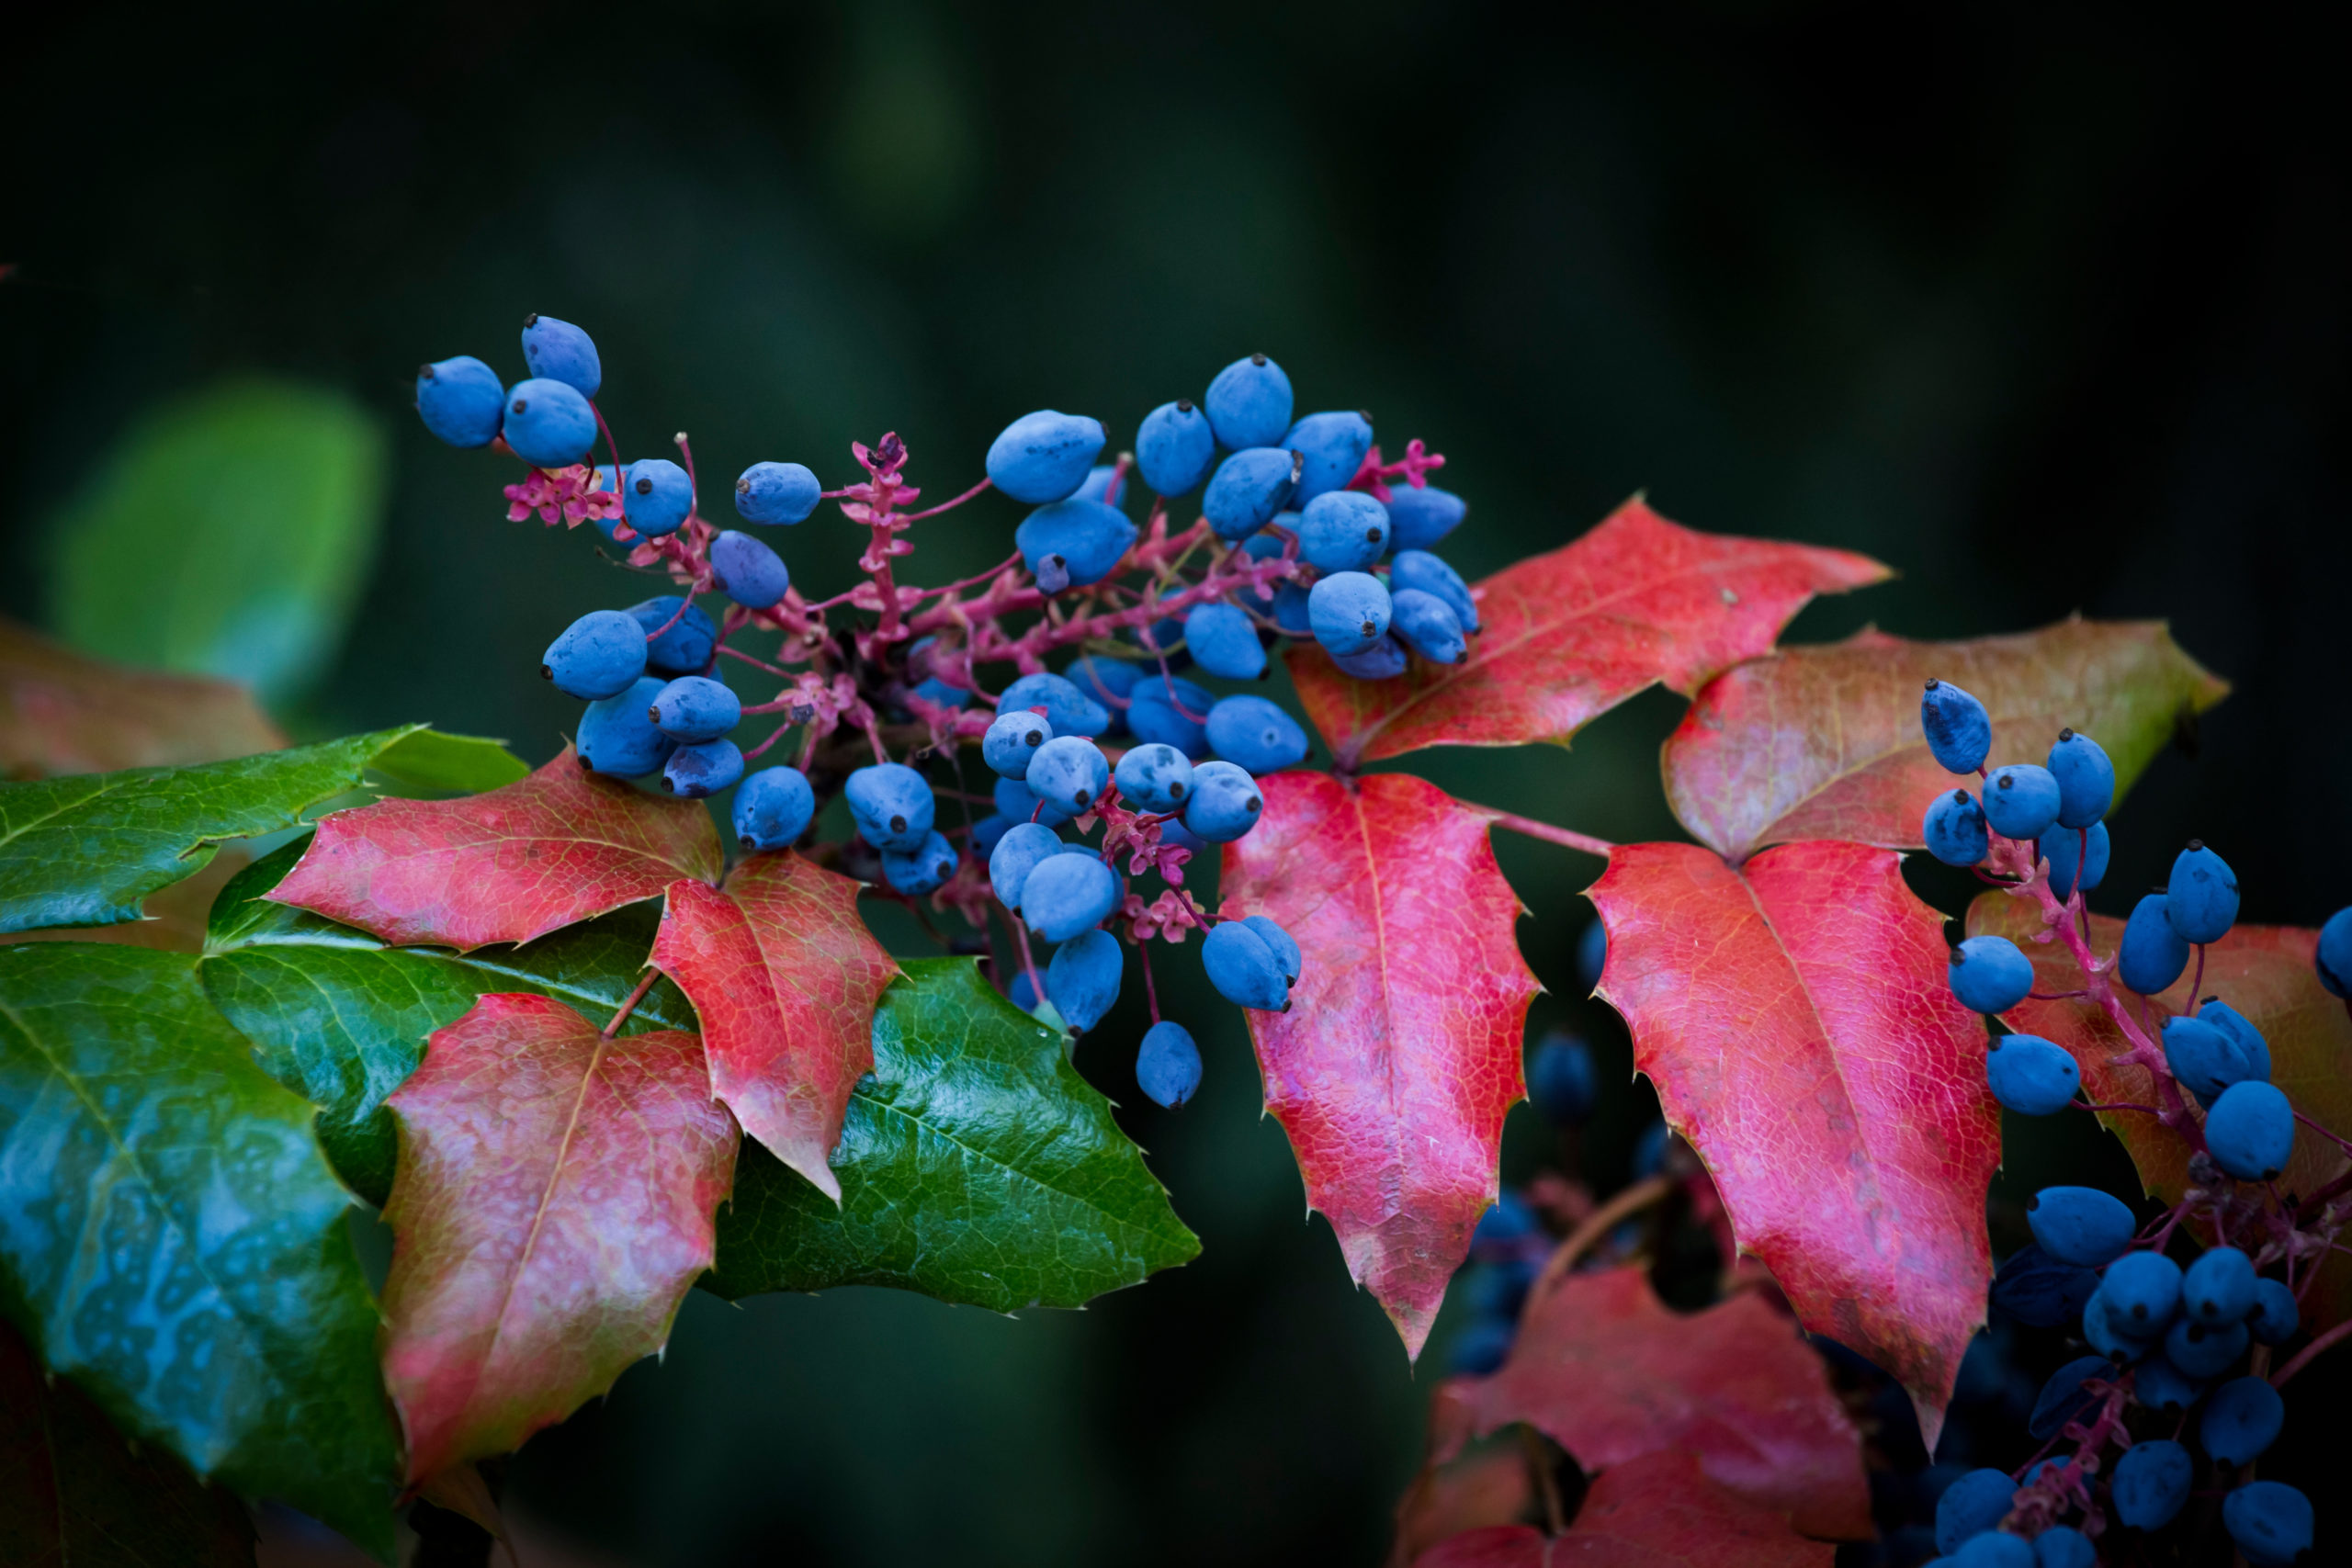 Herbal Focus: Oregon Grape <span class="latin">Mahonia (Berberis) aquifolium <span class="notLatin">and</span> M. nervosa</span>